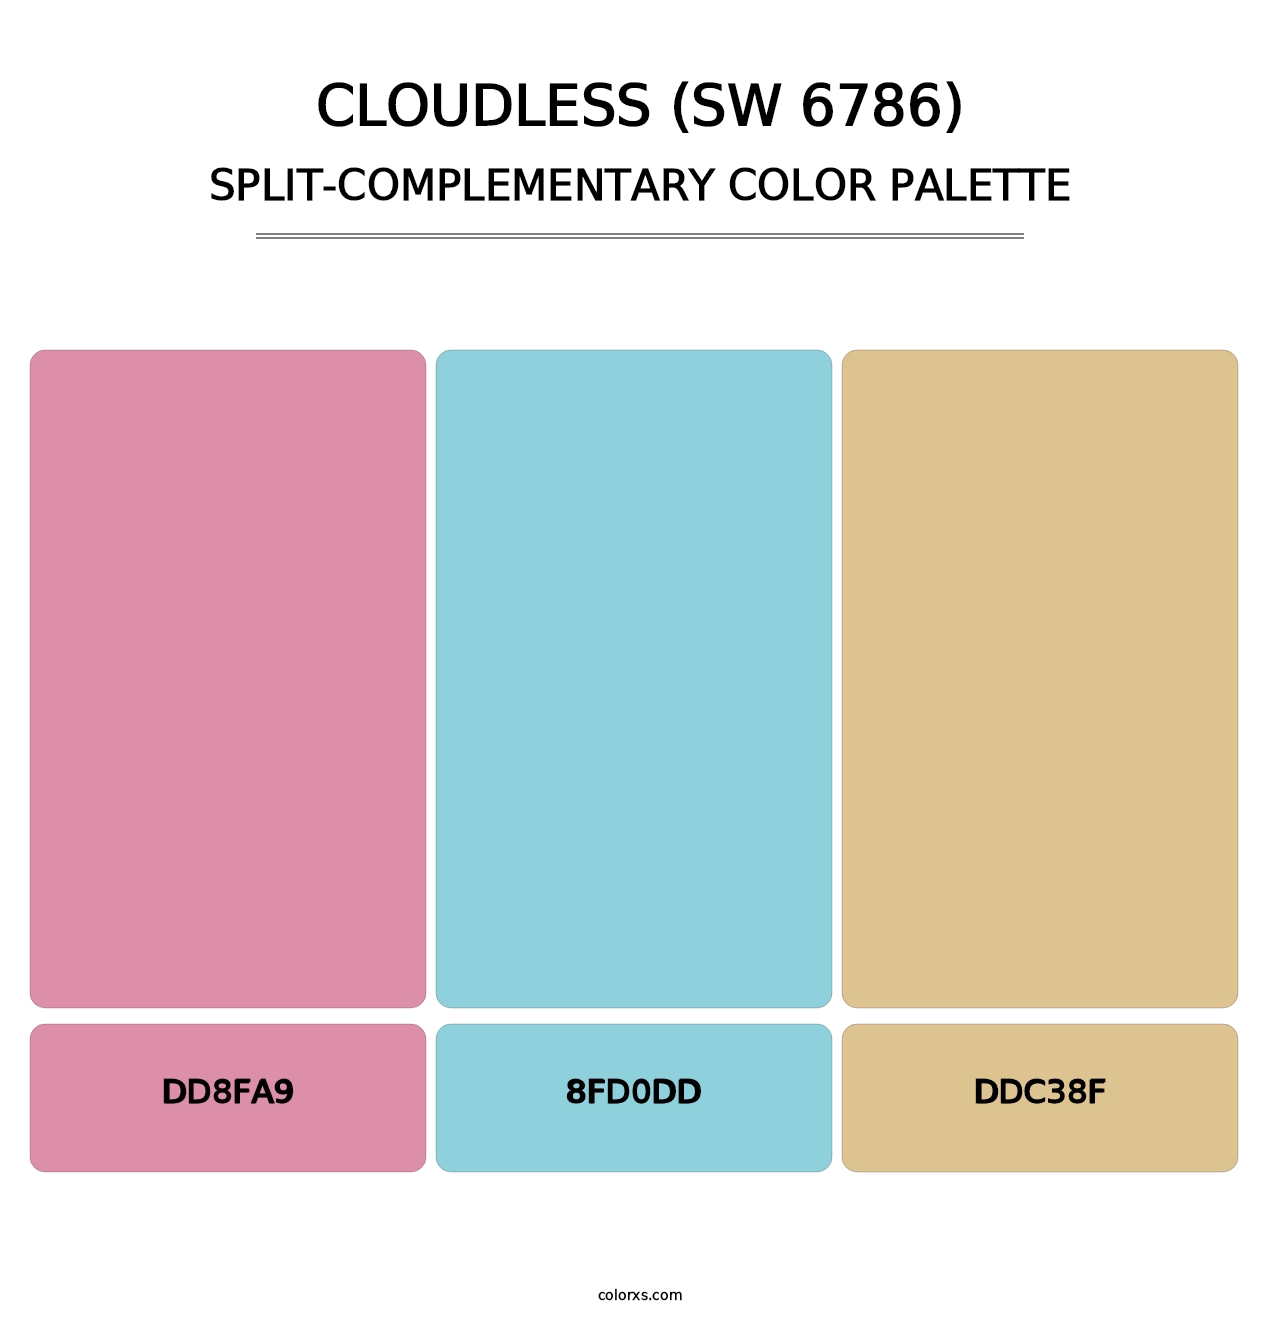 Cloudless (SW 6786) - Split-Complementary Color Palette